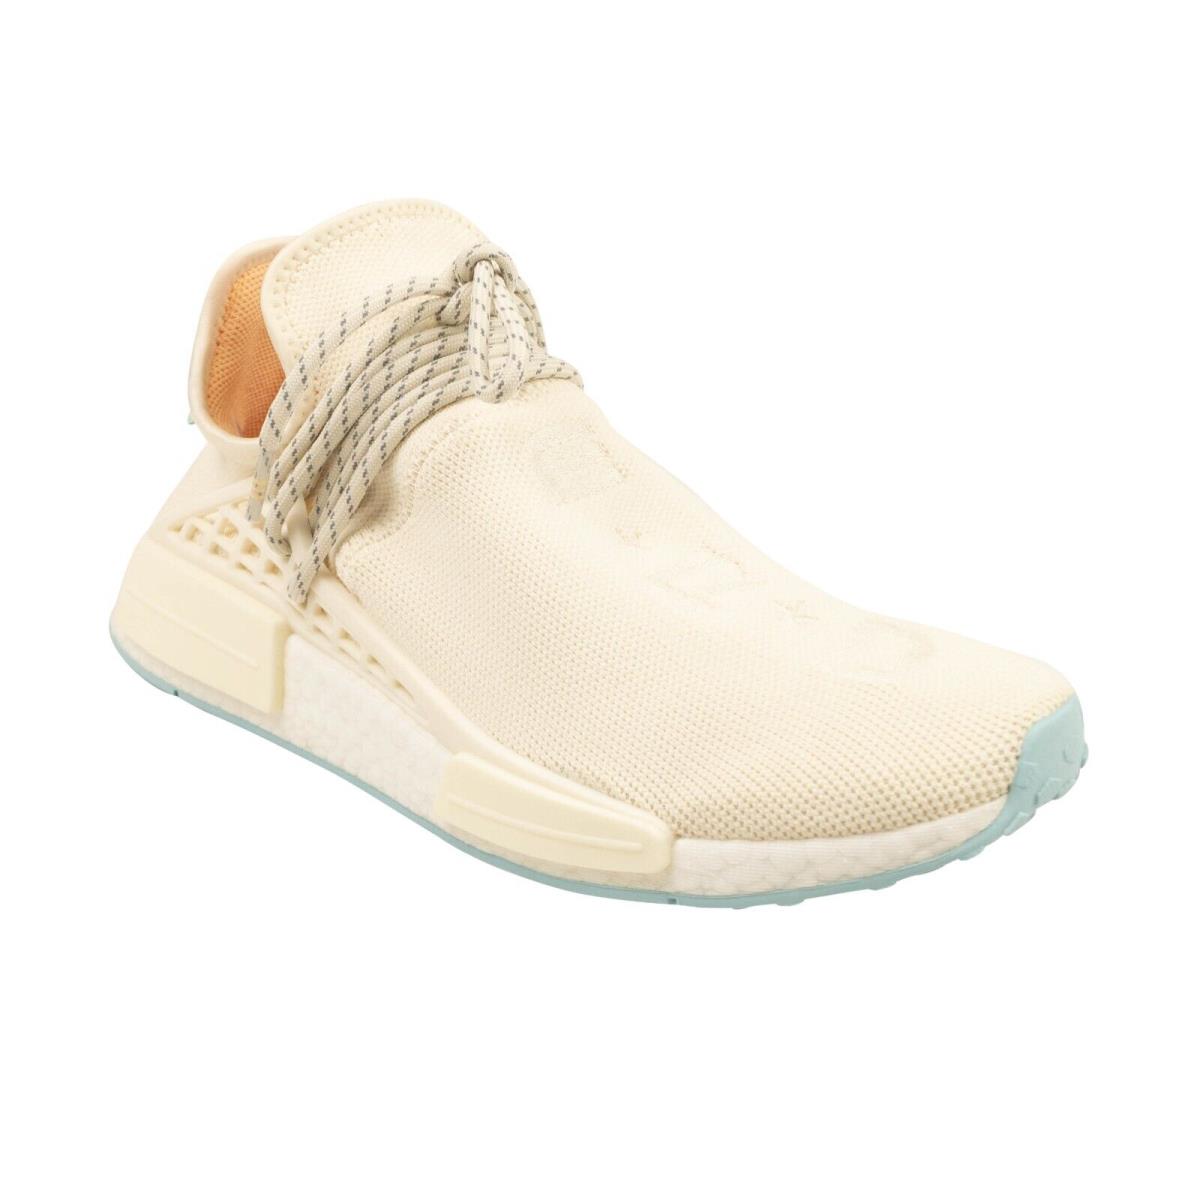 Adidas Chalk White Glow x Nerd Nmd Hu Sneakers Size 5/38 - Ivory